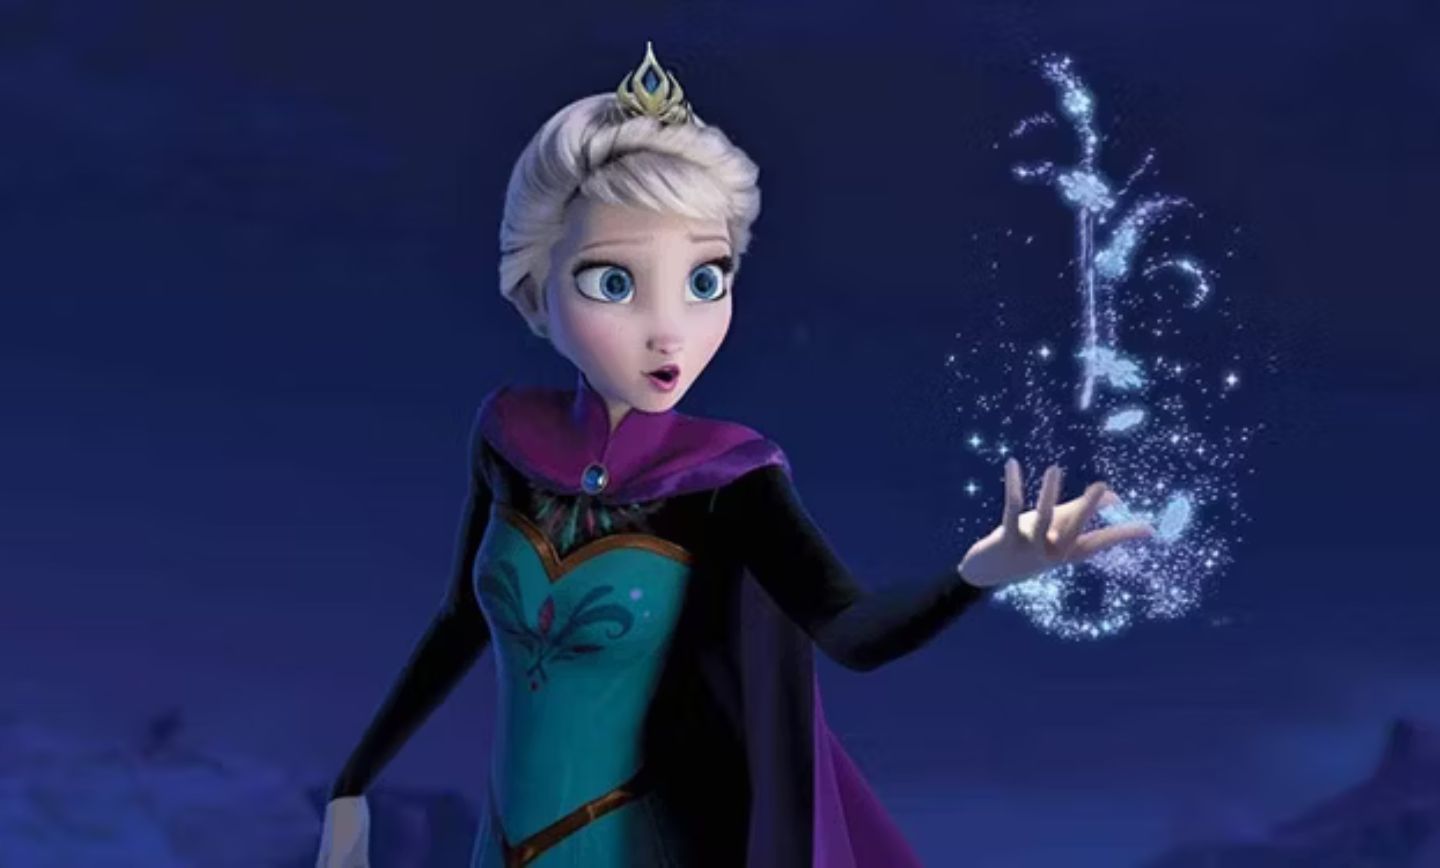 فروزن (2013) - السا شرور است (Frozen (2013) - Elsa Is the Villain)